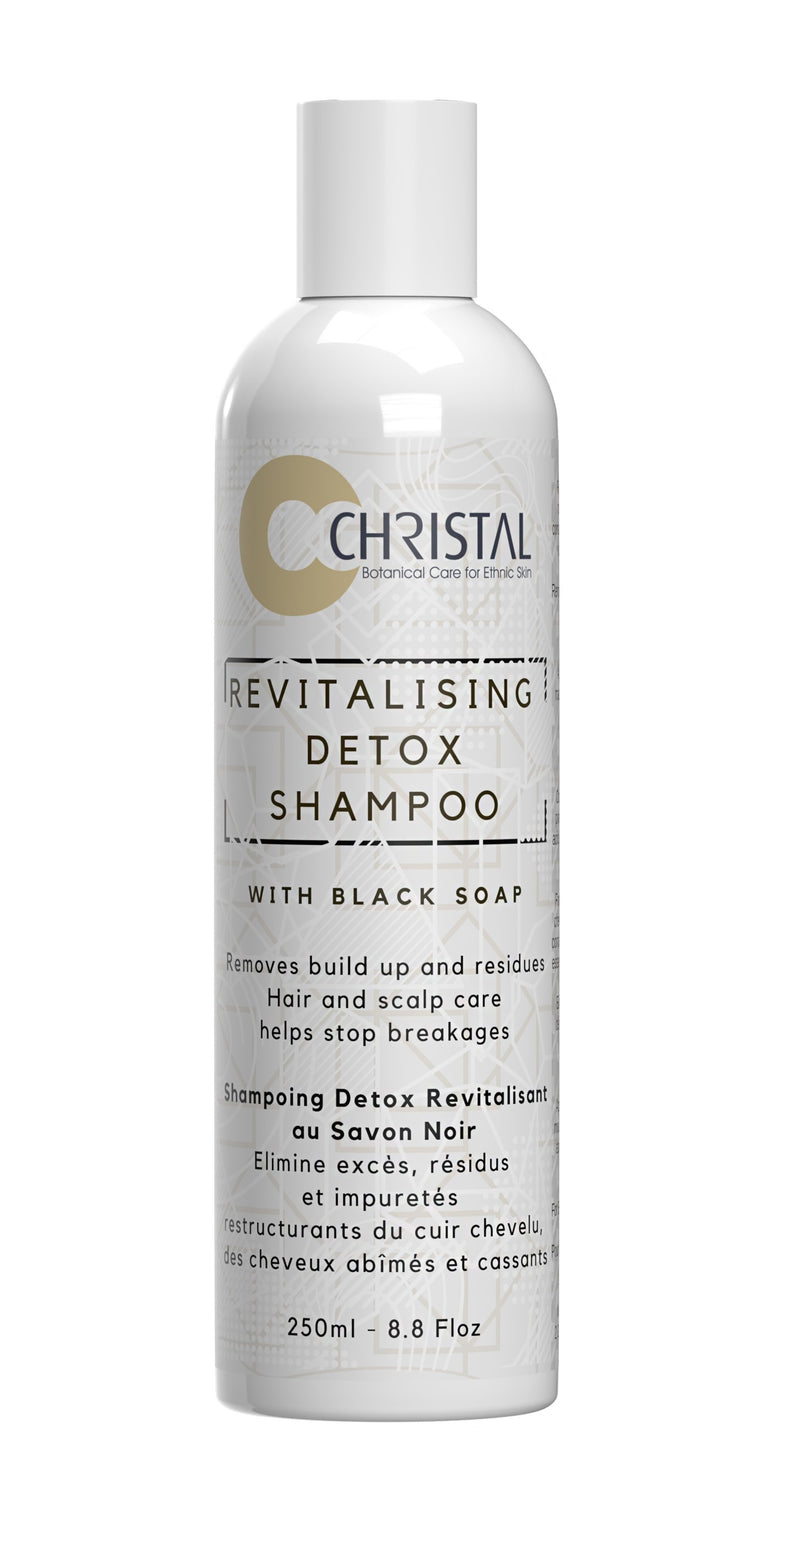 Revitalising Detox Shampoo with Black soap